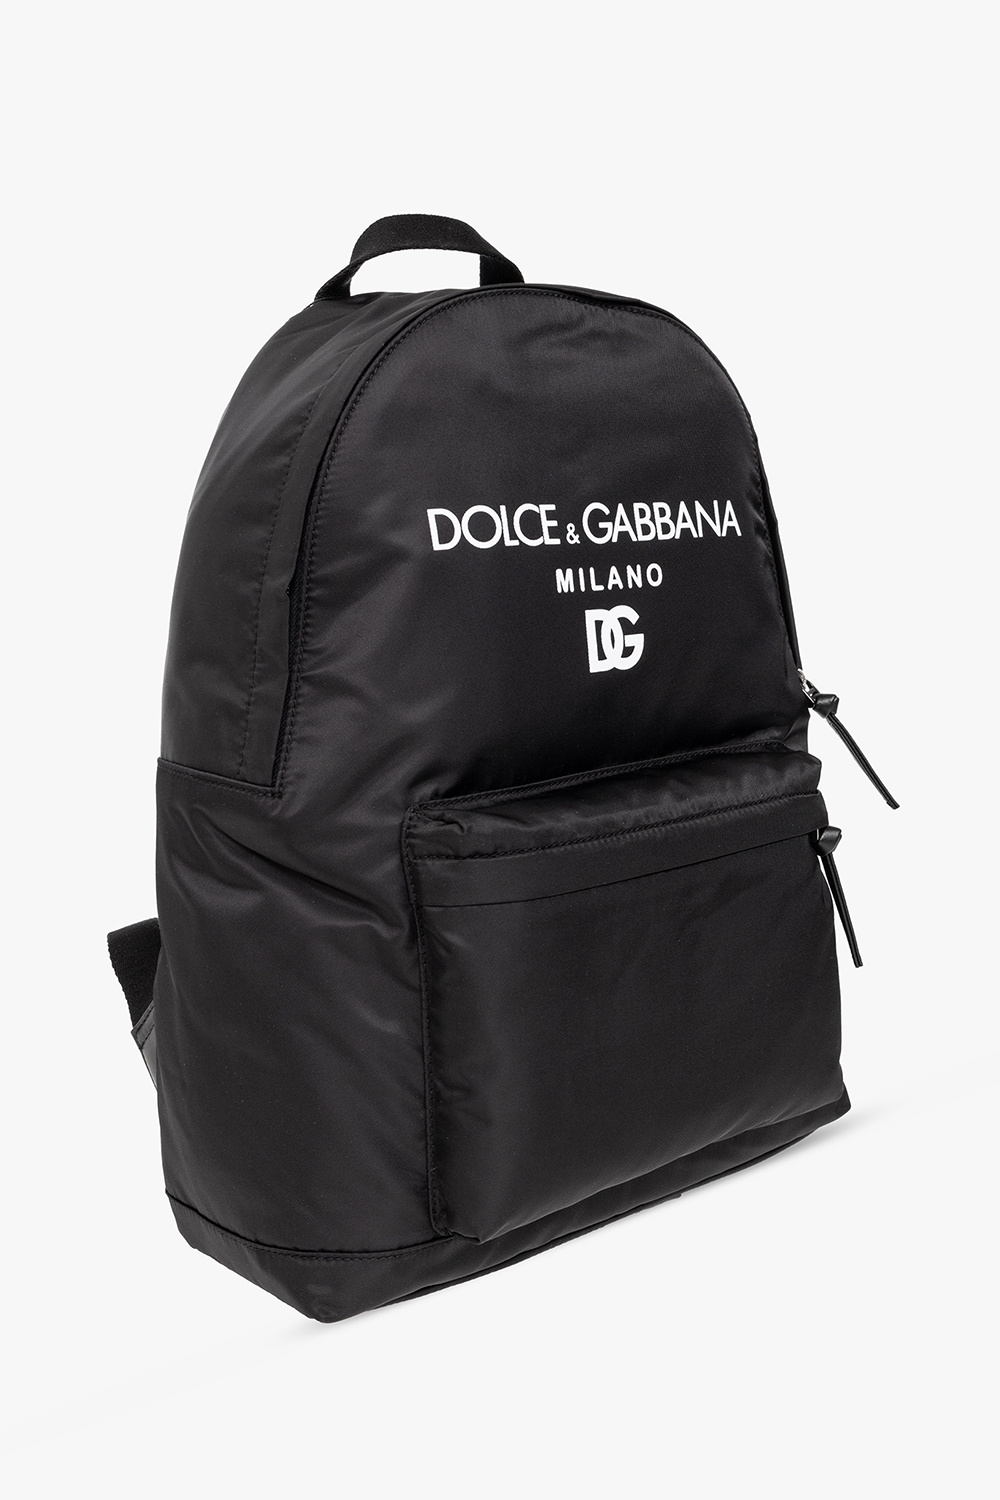 Dolce & Gabbana Kids Dolce & Gabbana 'Bellucci' pumps Purple